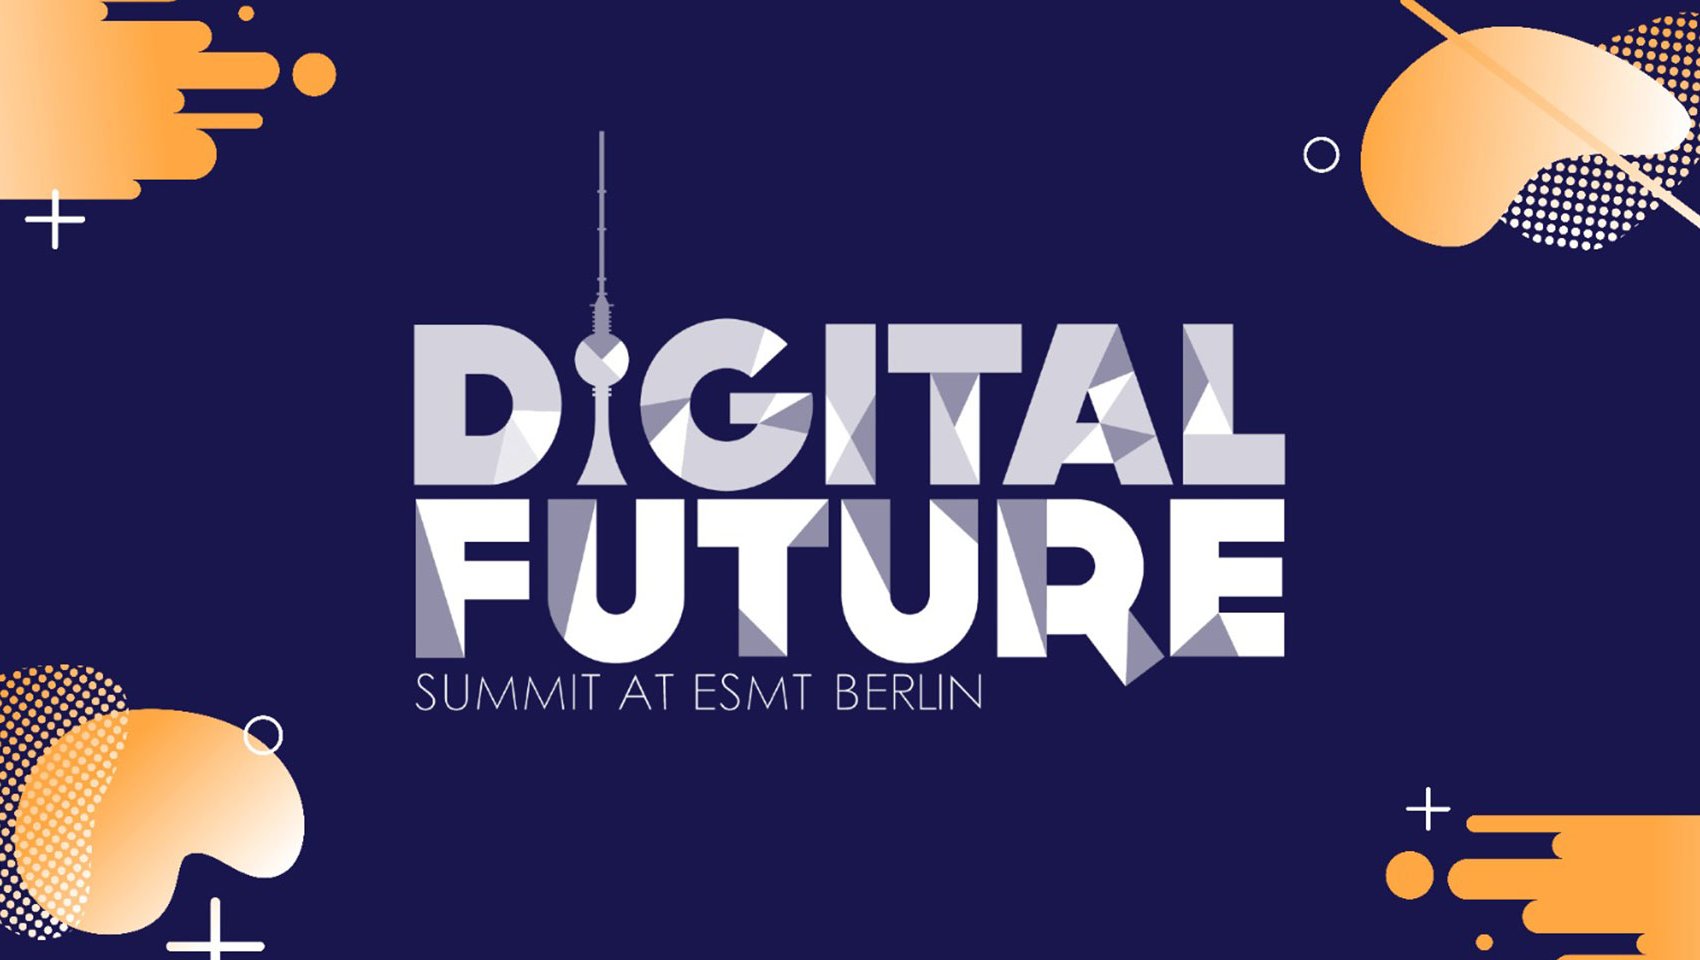 Words: Digital Future Summit at ESMT Berlin on blue background 